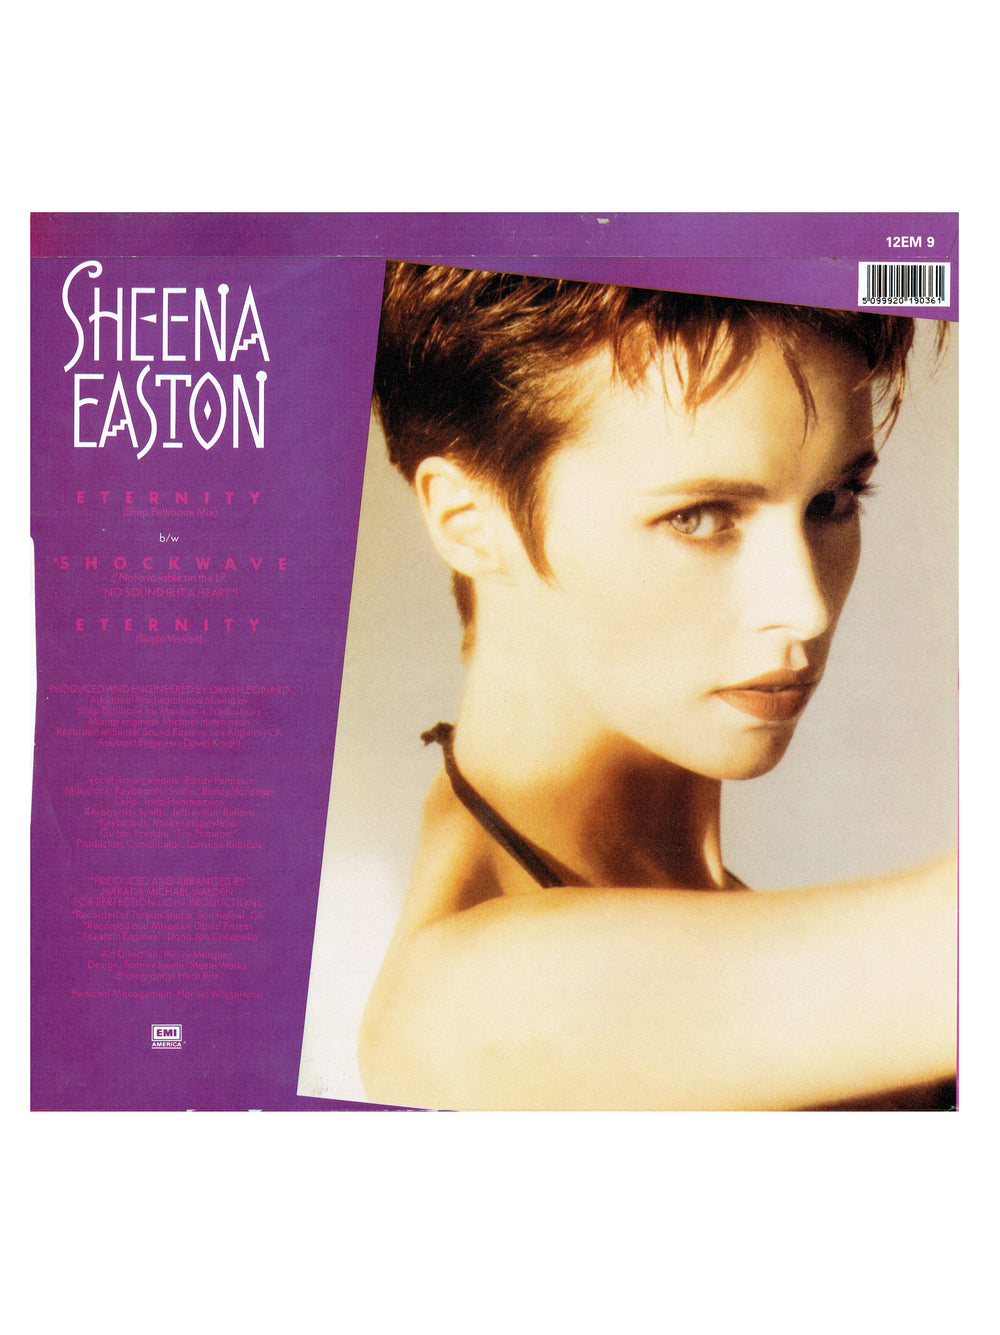 Prince – Sheena Easton Eternity Vinyl 12" Single Written By Prince WU Preloved: 1987